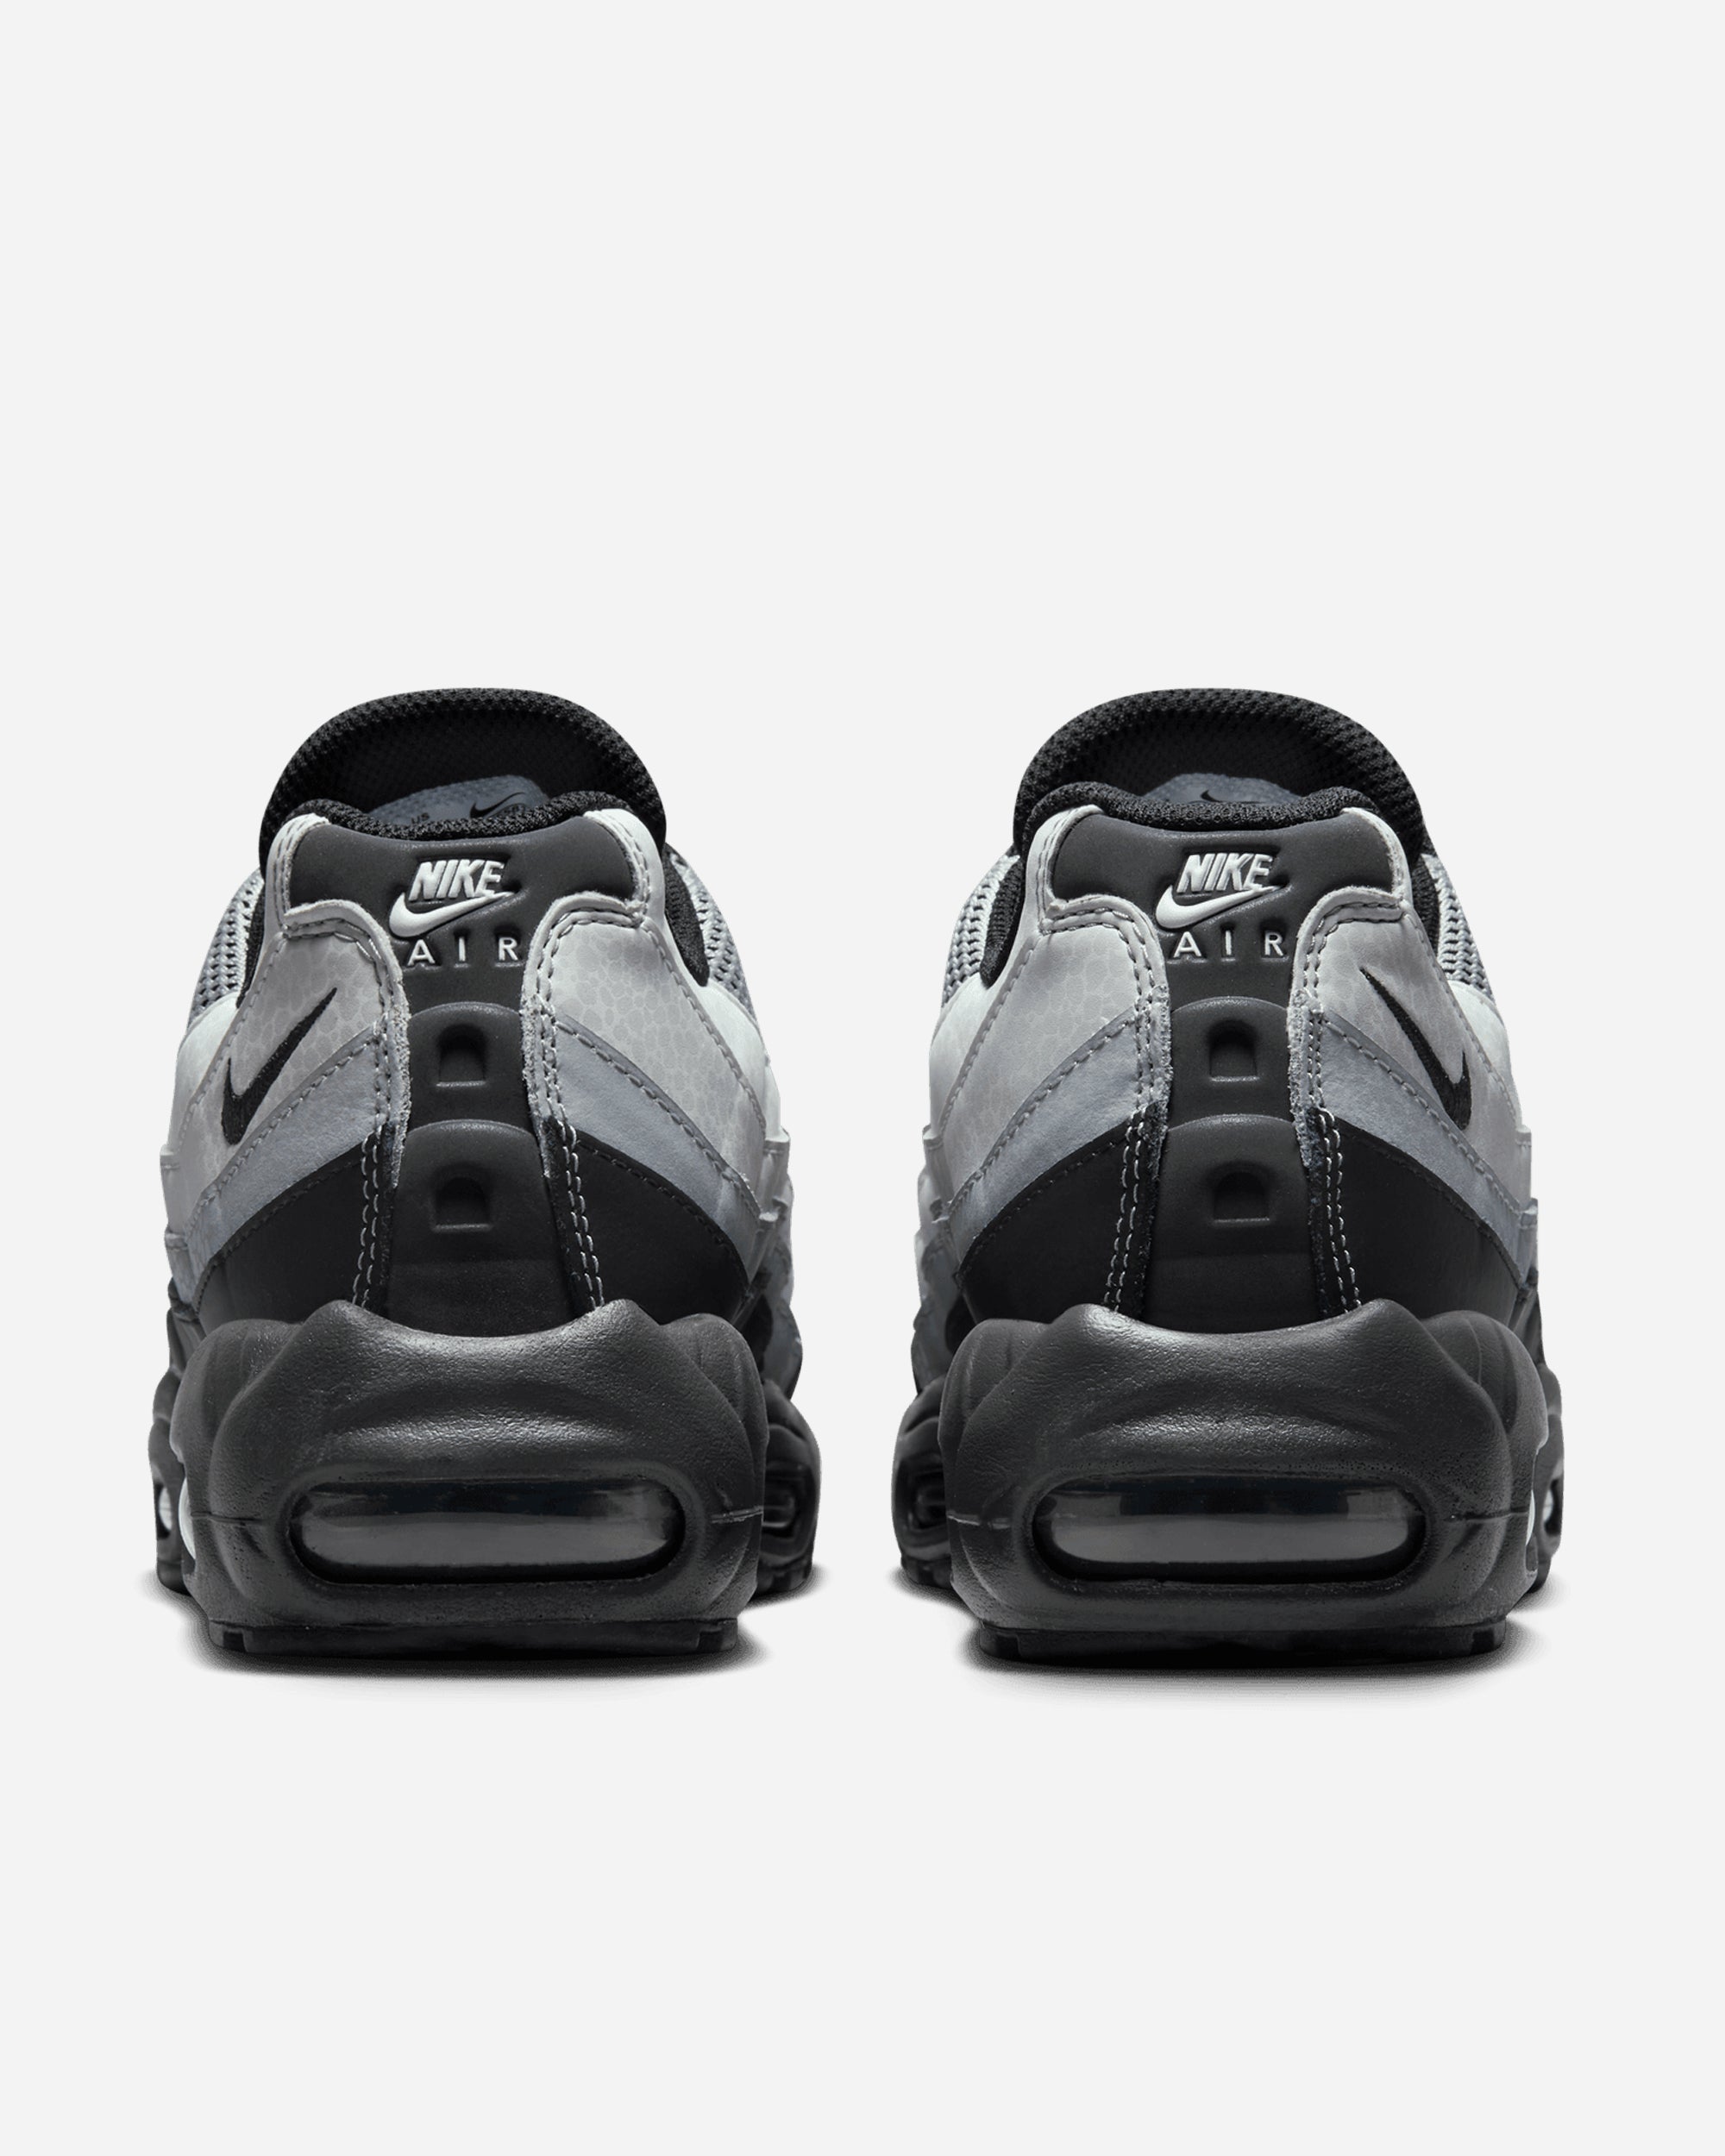 Nike Air Max 95 LX "Reflective Safari" LT SMOKE GREY/BLACK-PHOTON  DV5581-001